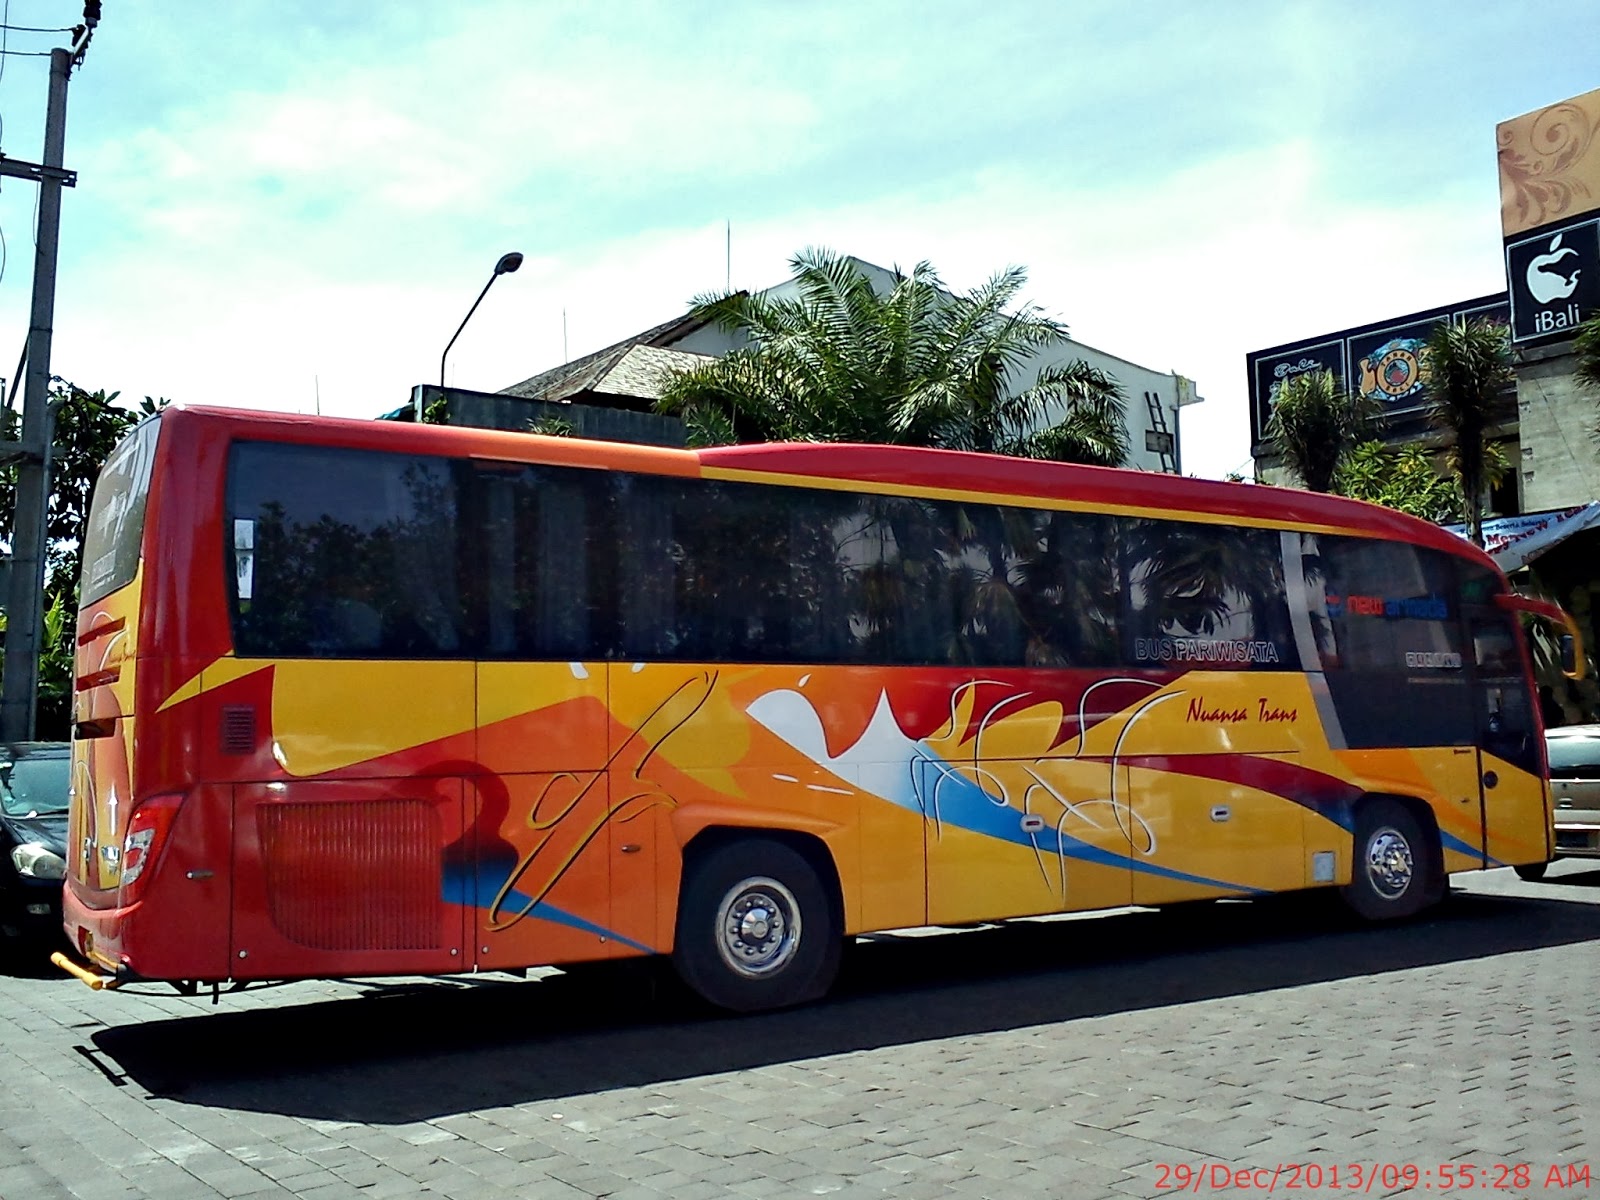 Bus Nuansa Trans Tkp Pusat Oleh Oleh Agung Bali Bus Bus Pariwisata